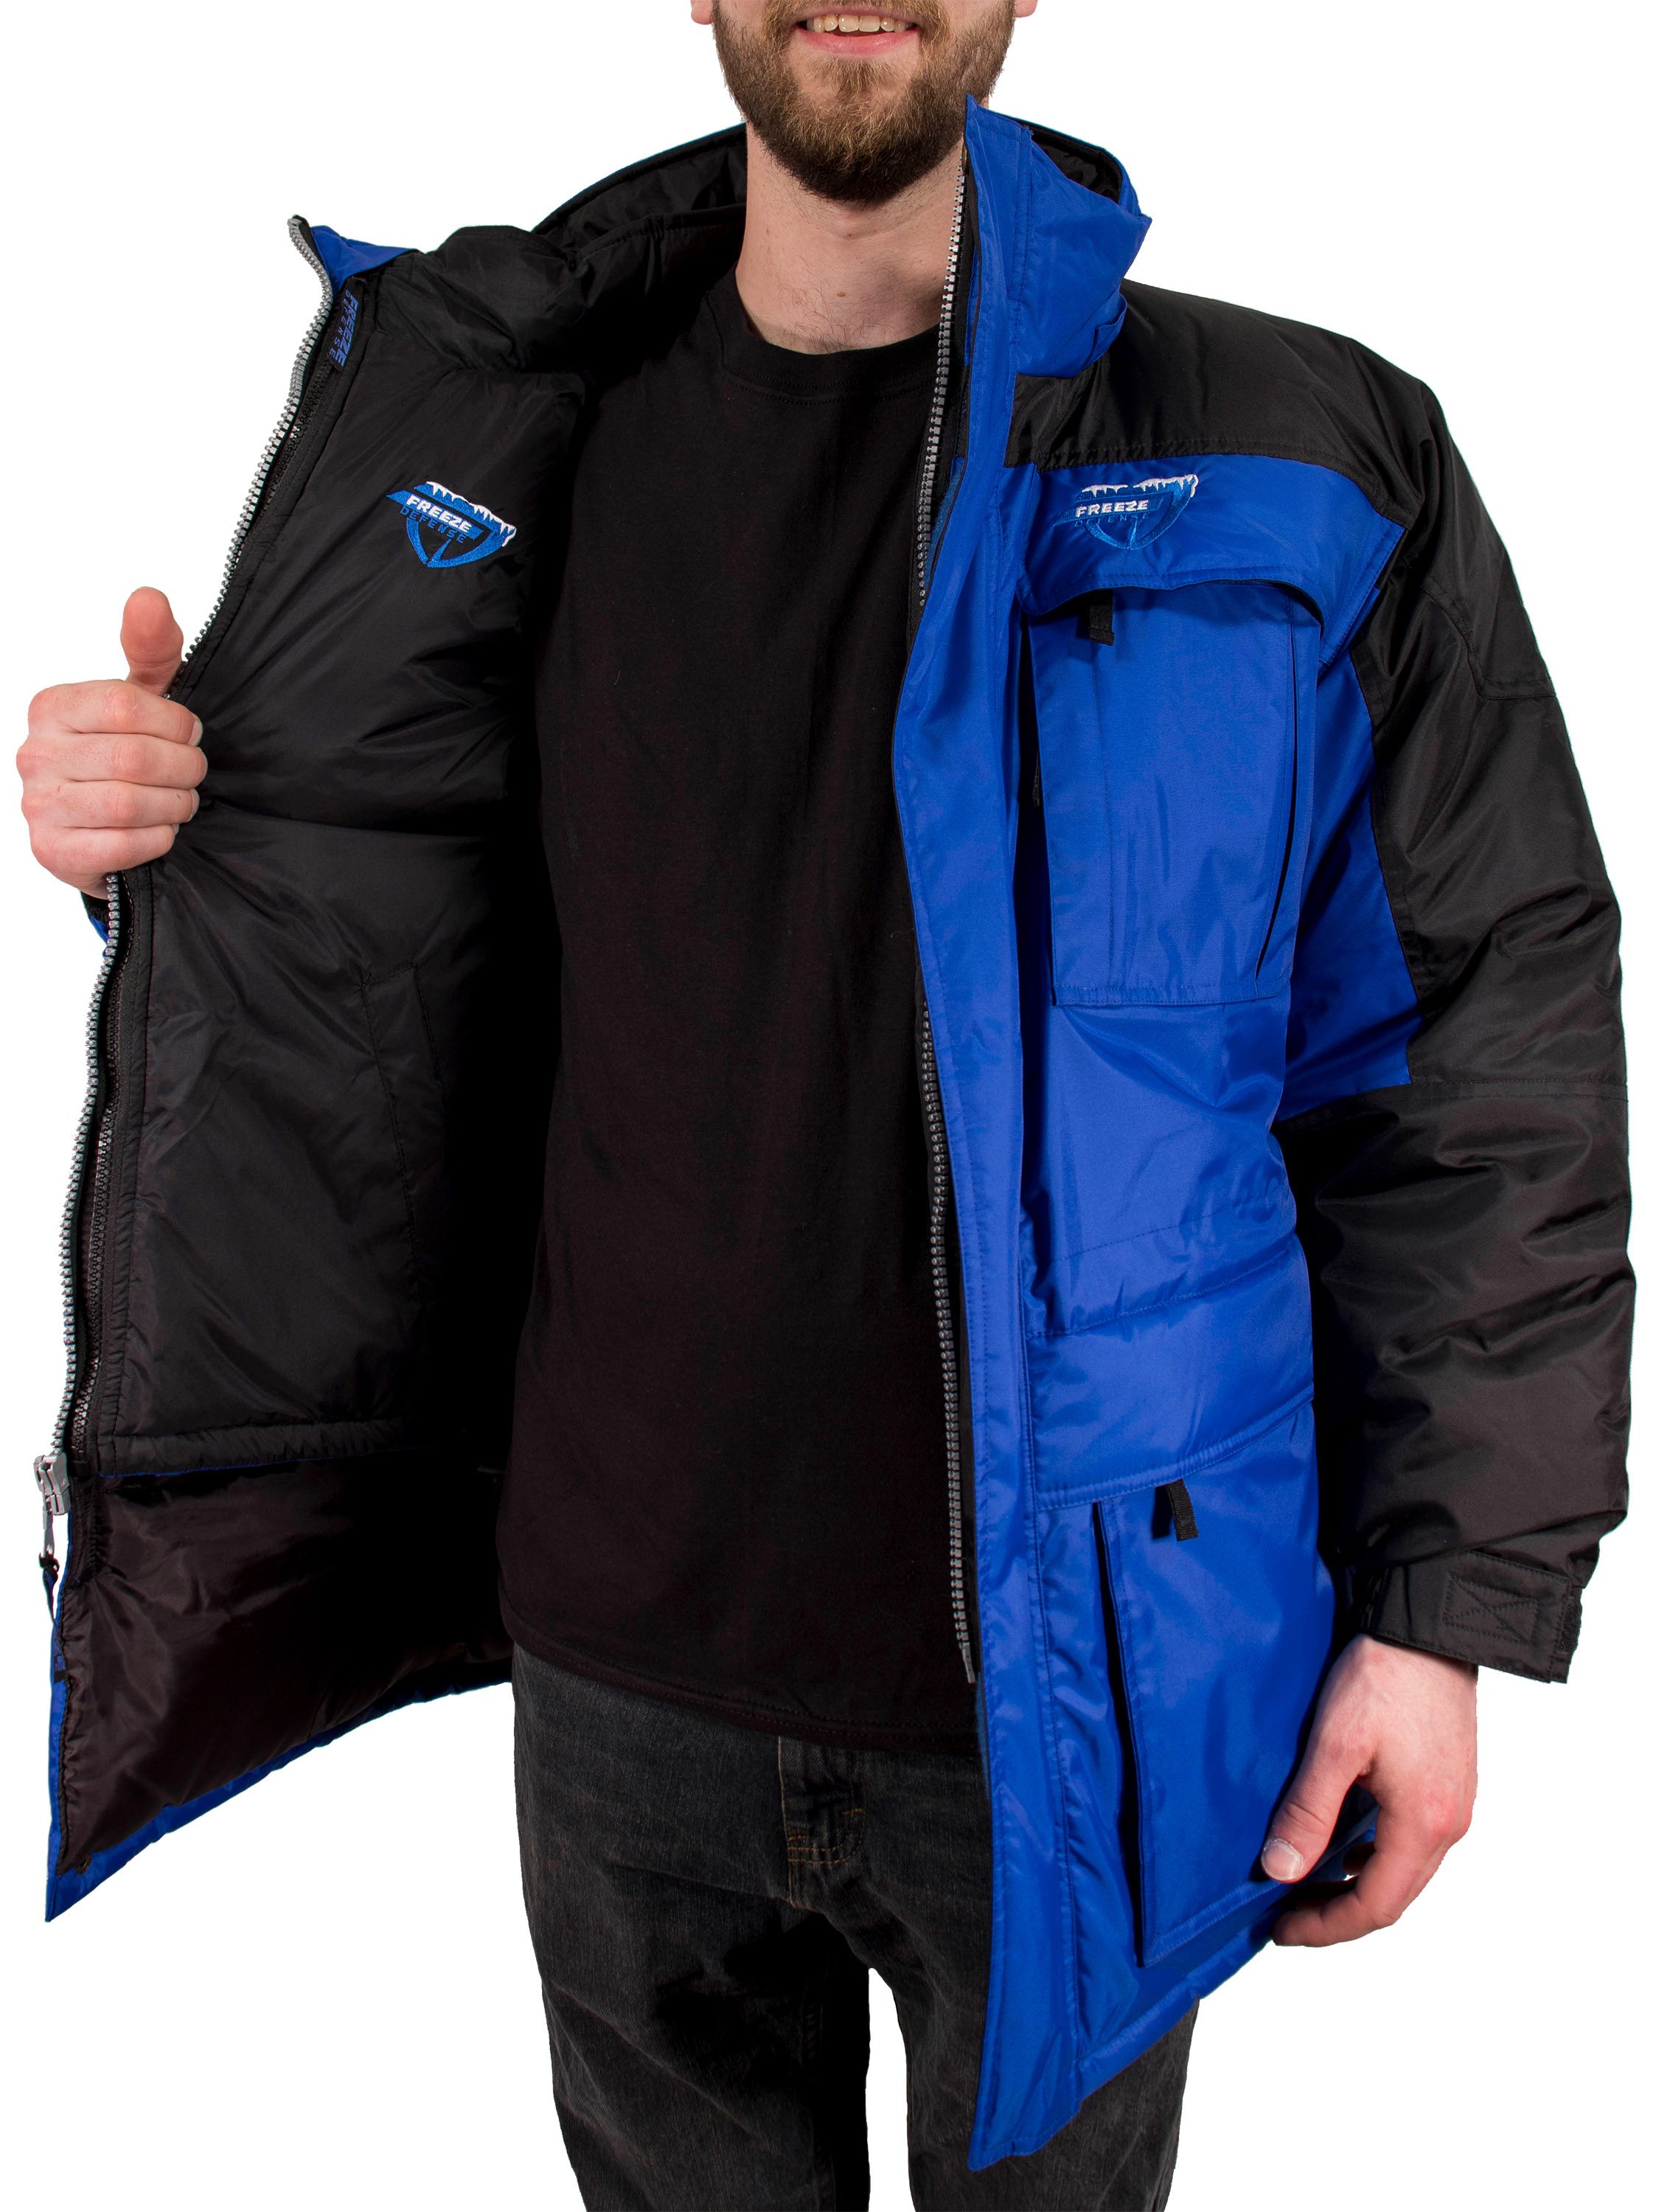 Freeze Defense Warm Men's 3in1 Winter Jacket Coat Parka & Vest (Small, Blue) - image 6 of 10